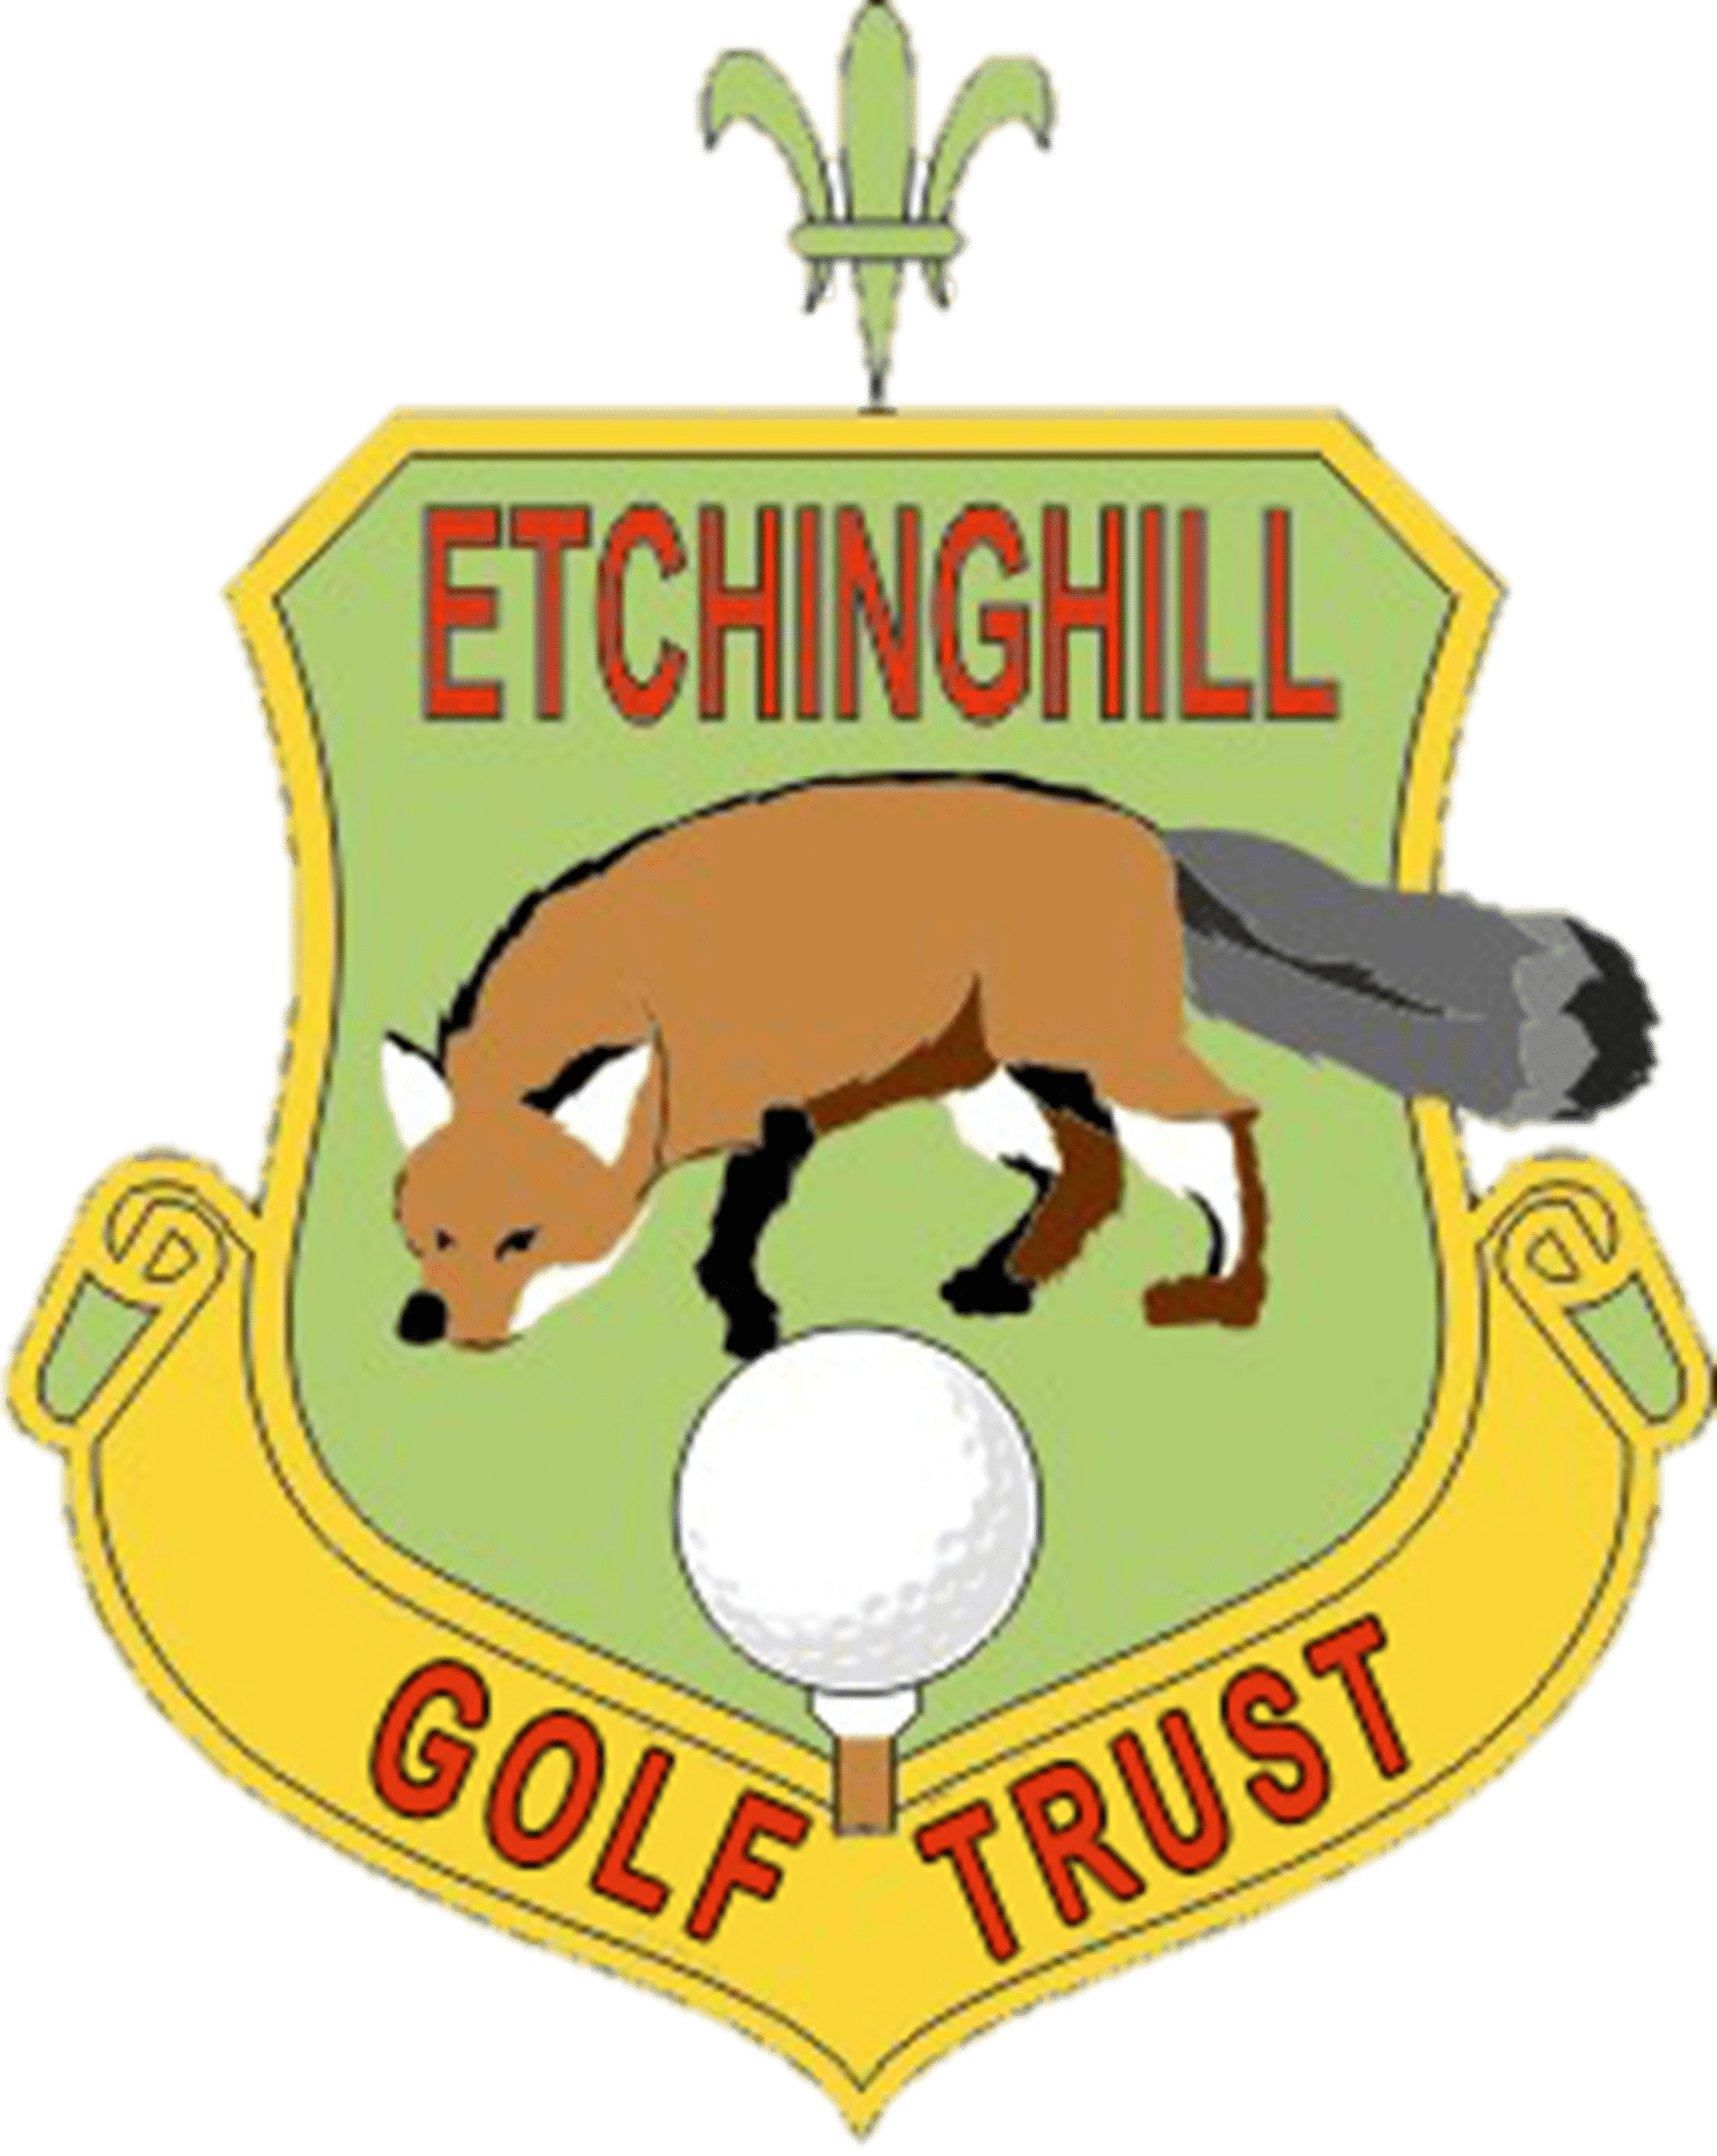 Etchinghill Golf Trust